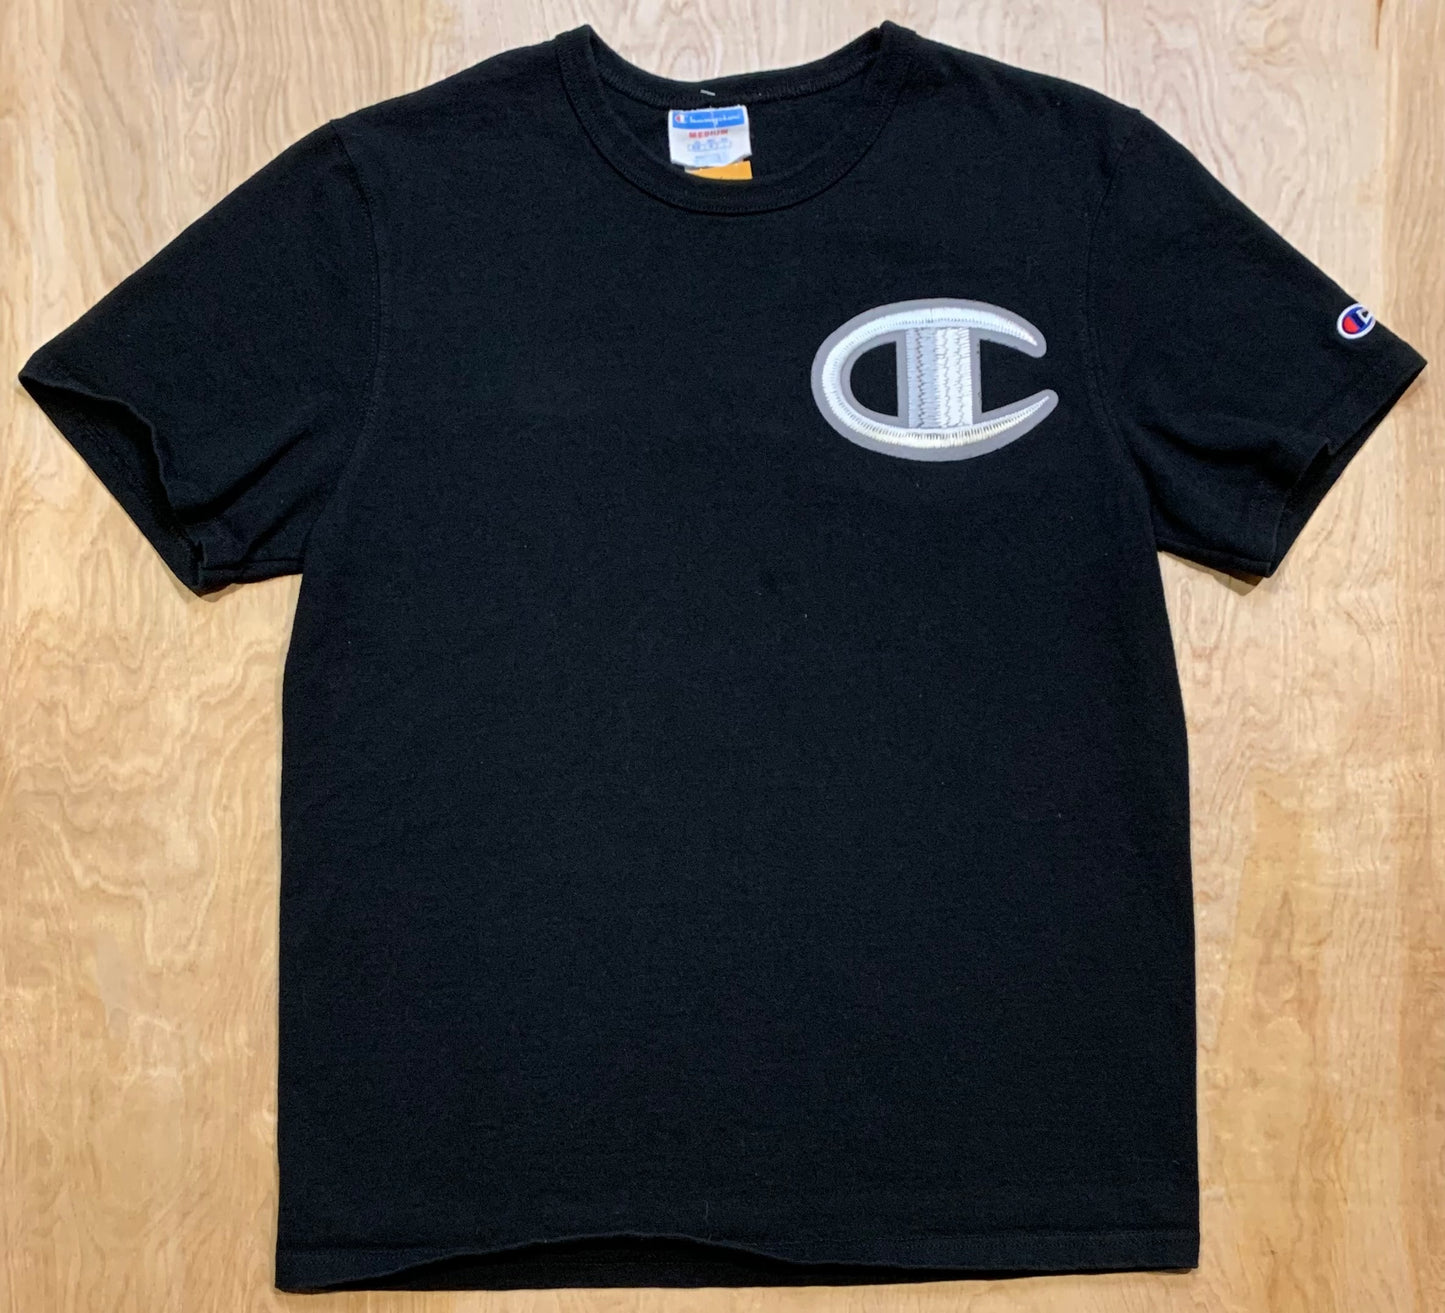 Vintage Champion Black T-Shirt